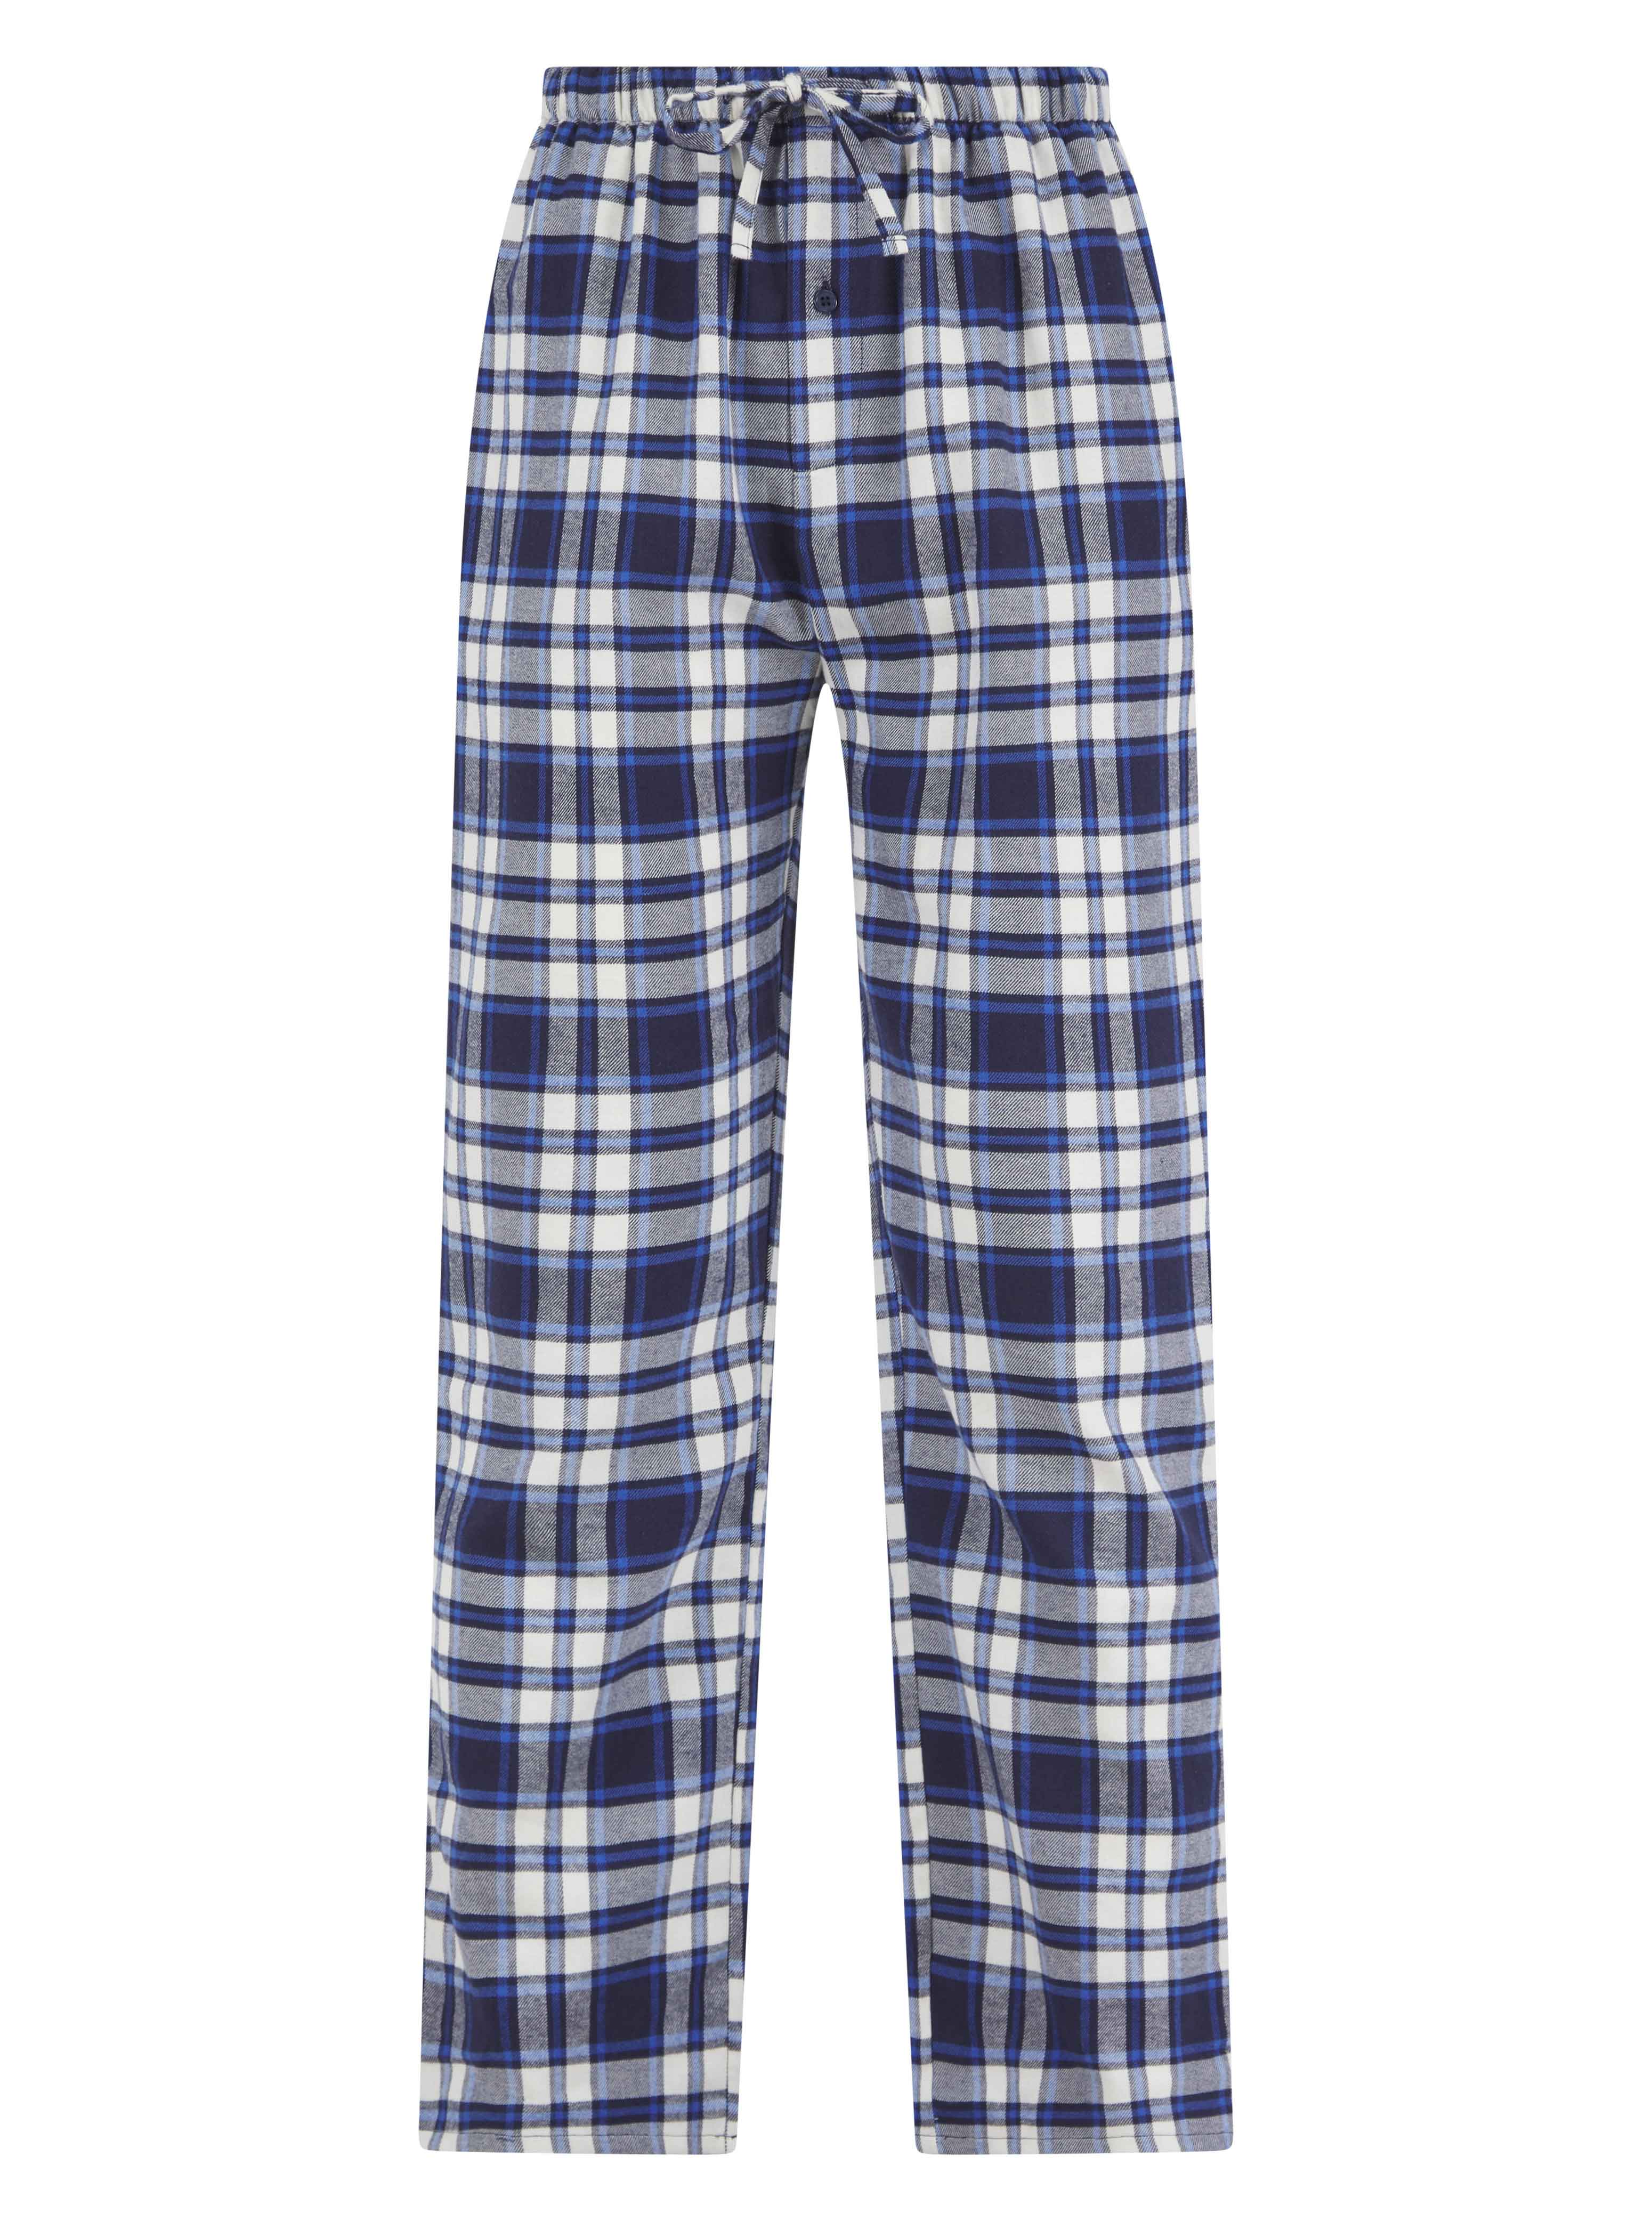 Woven Cotton Brushed Check Print Pyjama Trouser Bottom WR04812